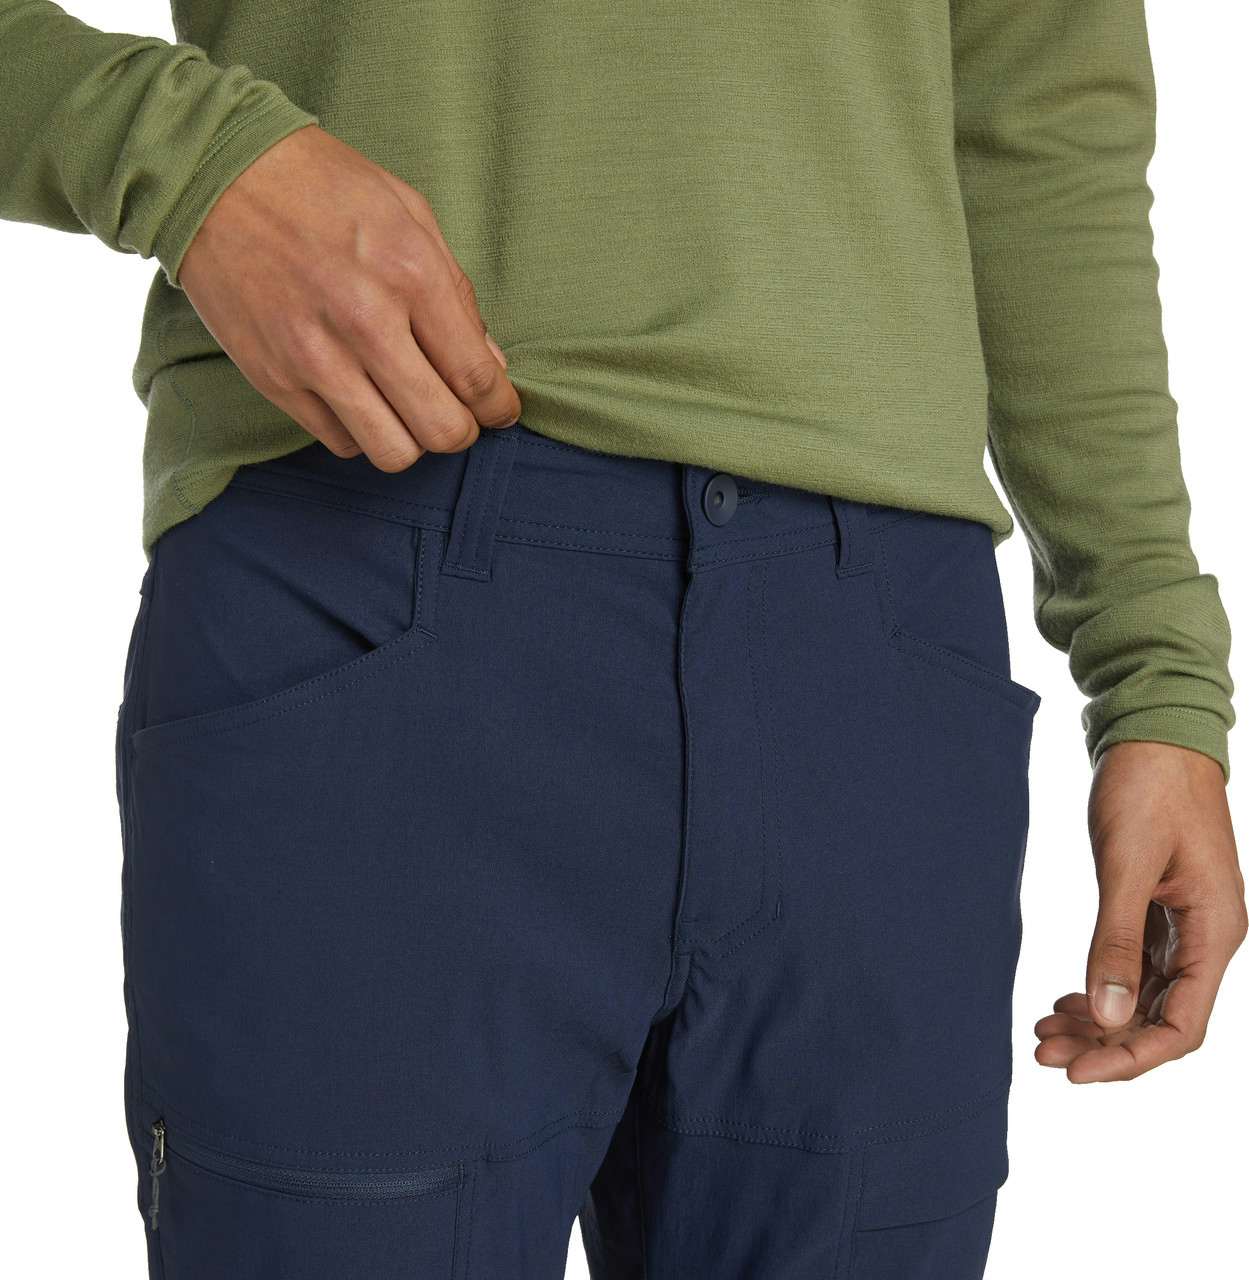 Pantalon extensible Mochilero Marine profond